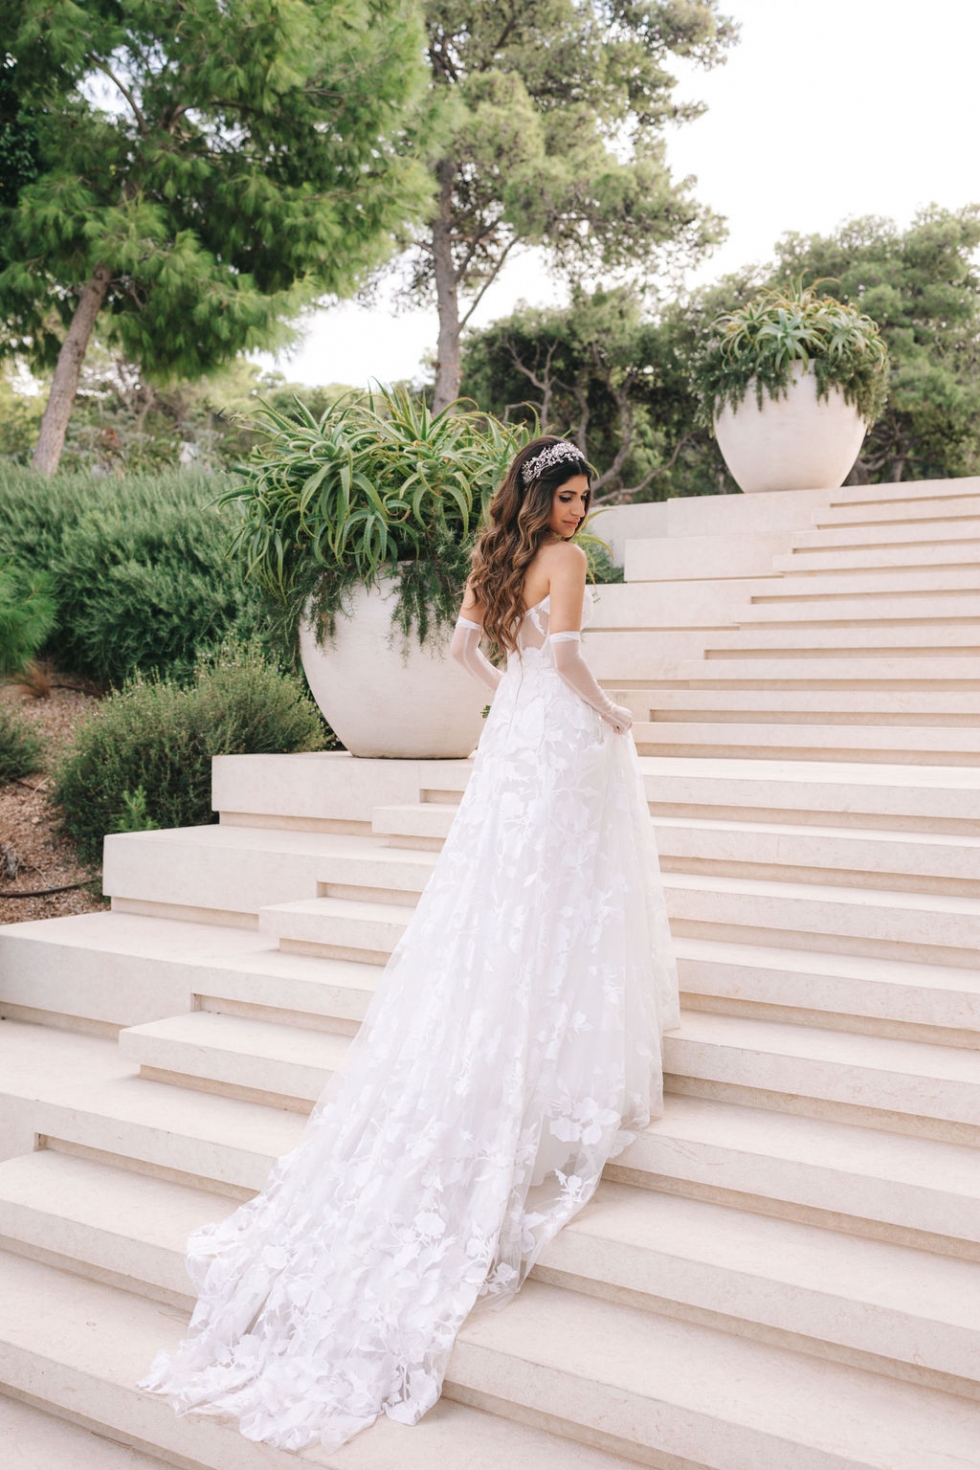 Le Jardin d'Amour Destination Wedding in Athens